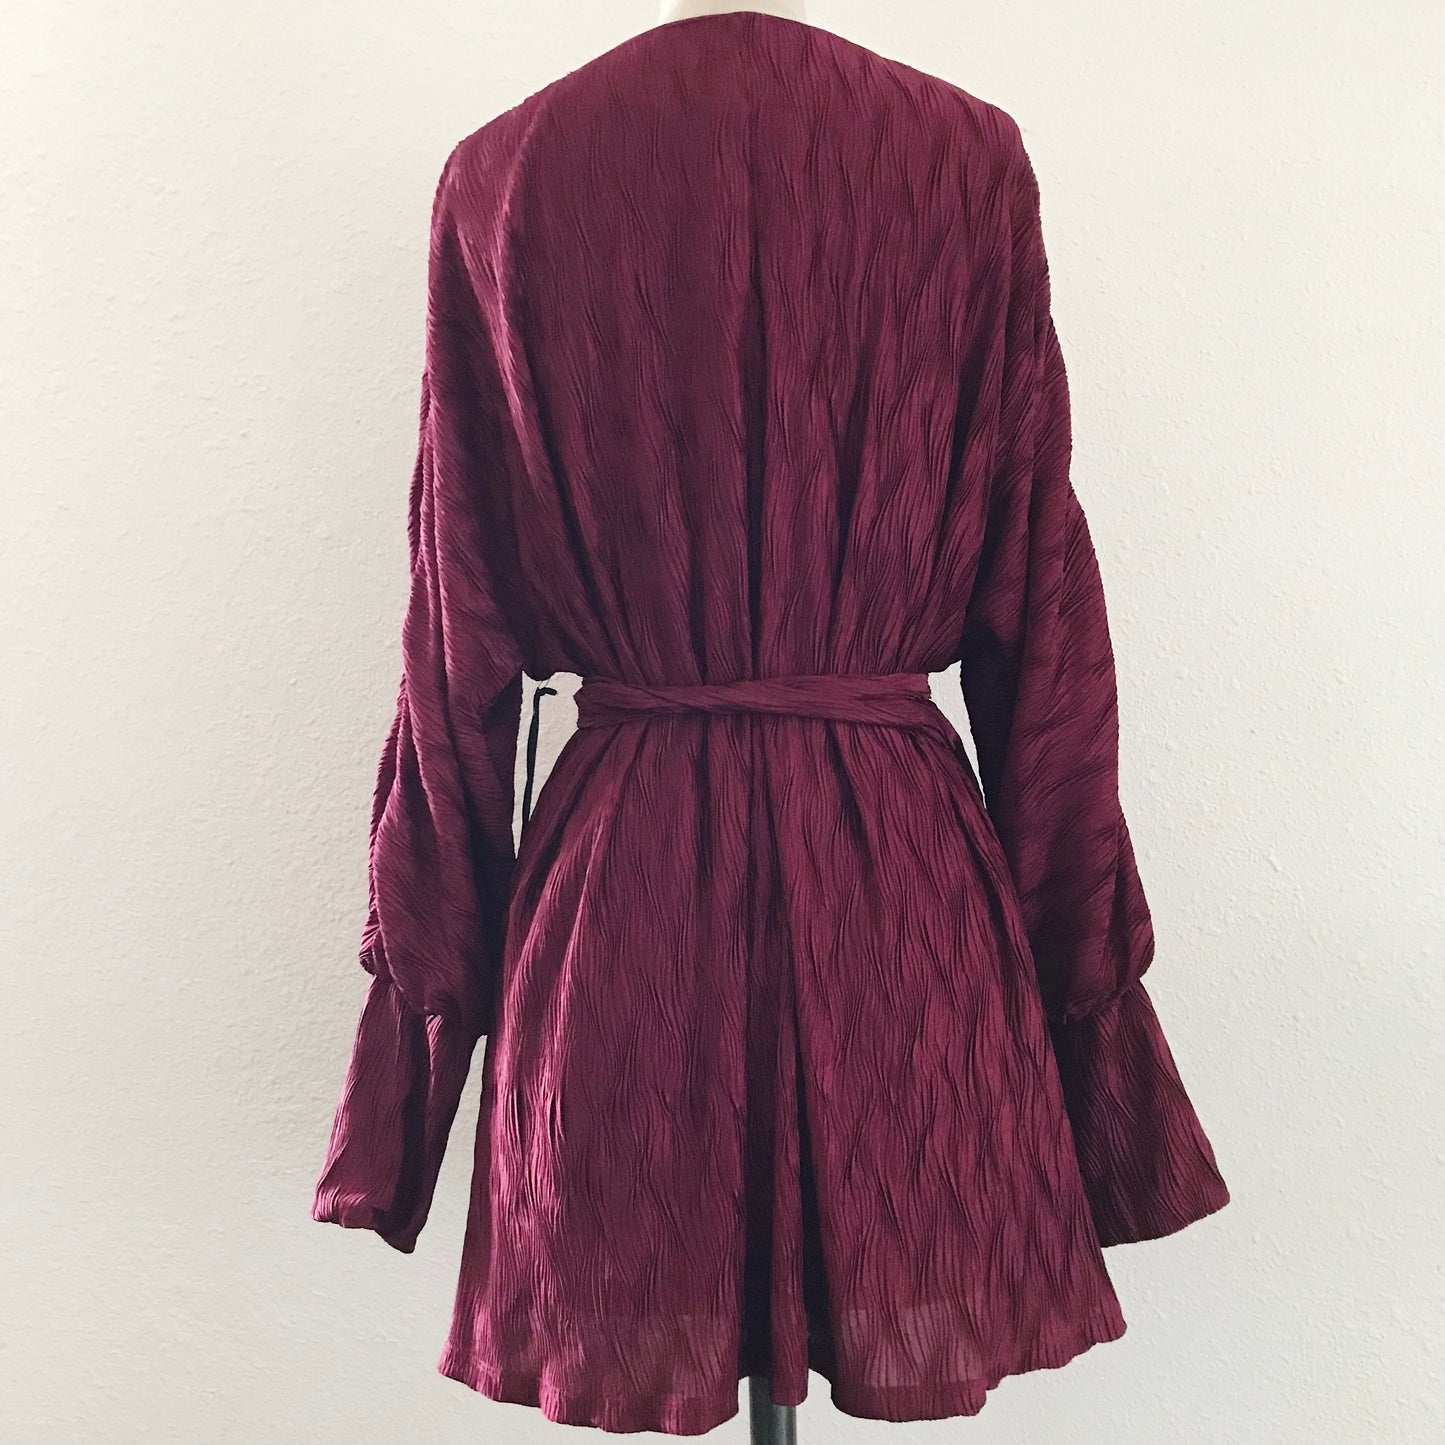 Prelovely | House of Harlow Retro Burgundy Satin Wrap Dress